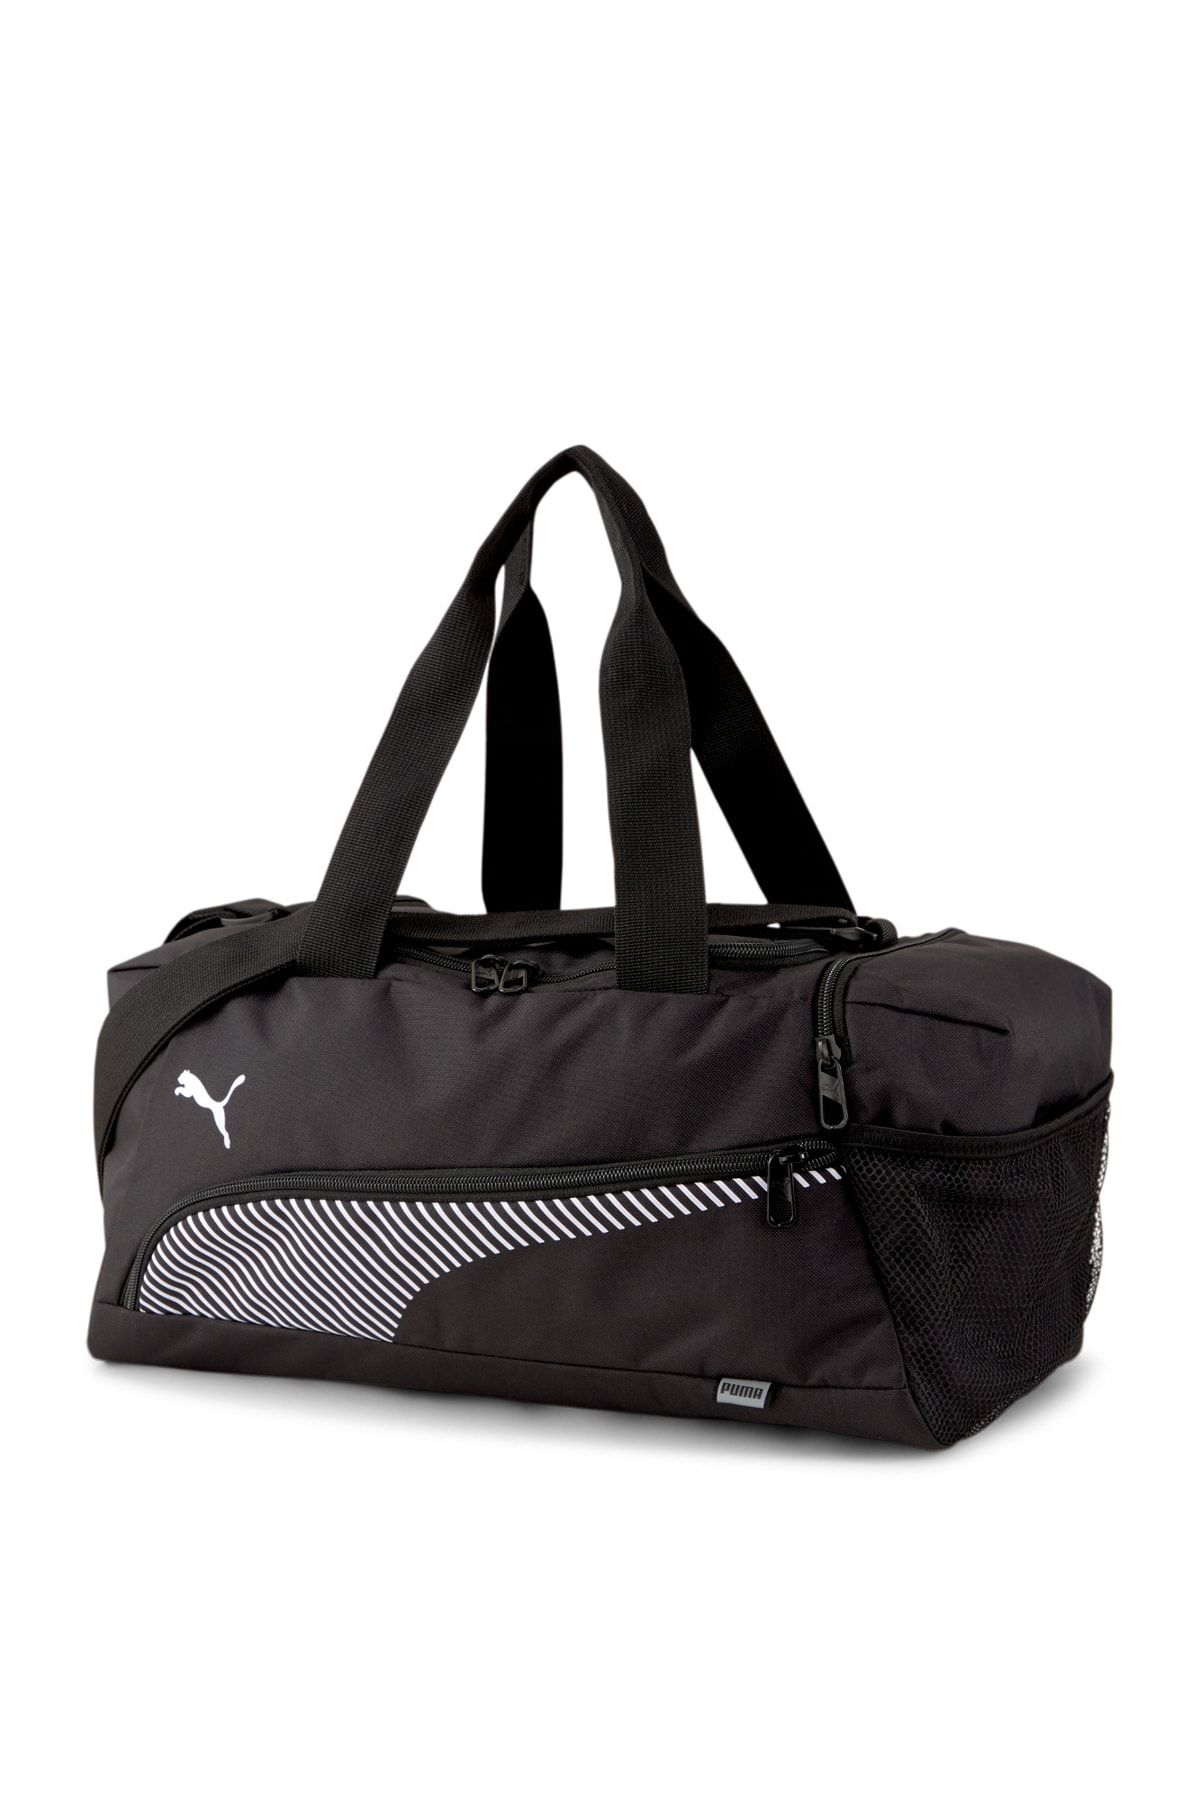 Puma Unisex Siyah  Spor Çantası - Fundamentals Sports Bag XS  - 07729101